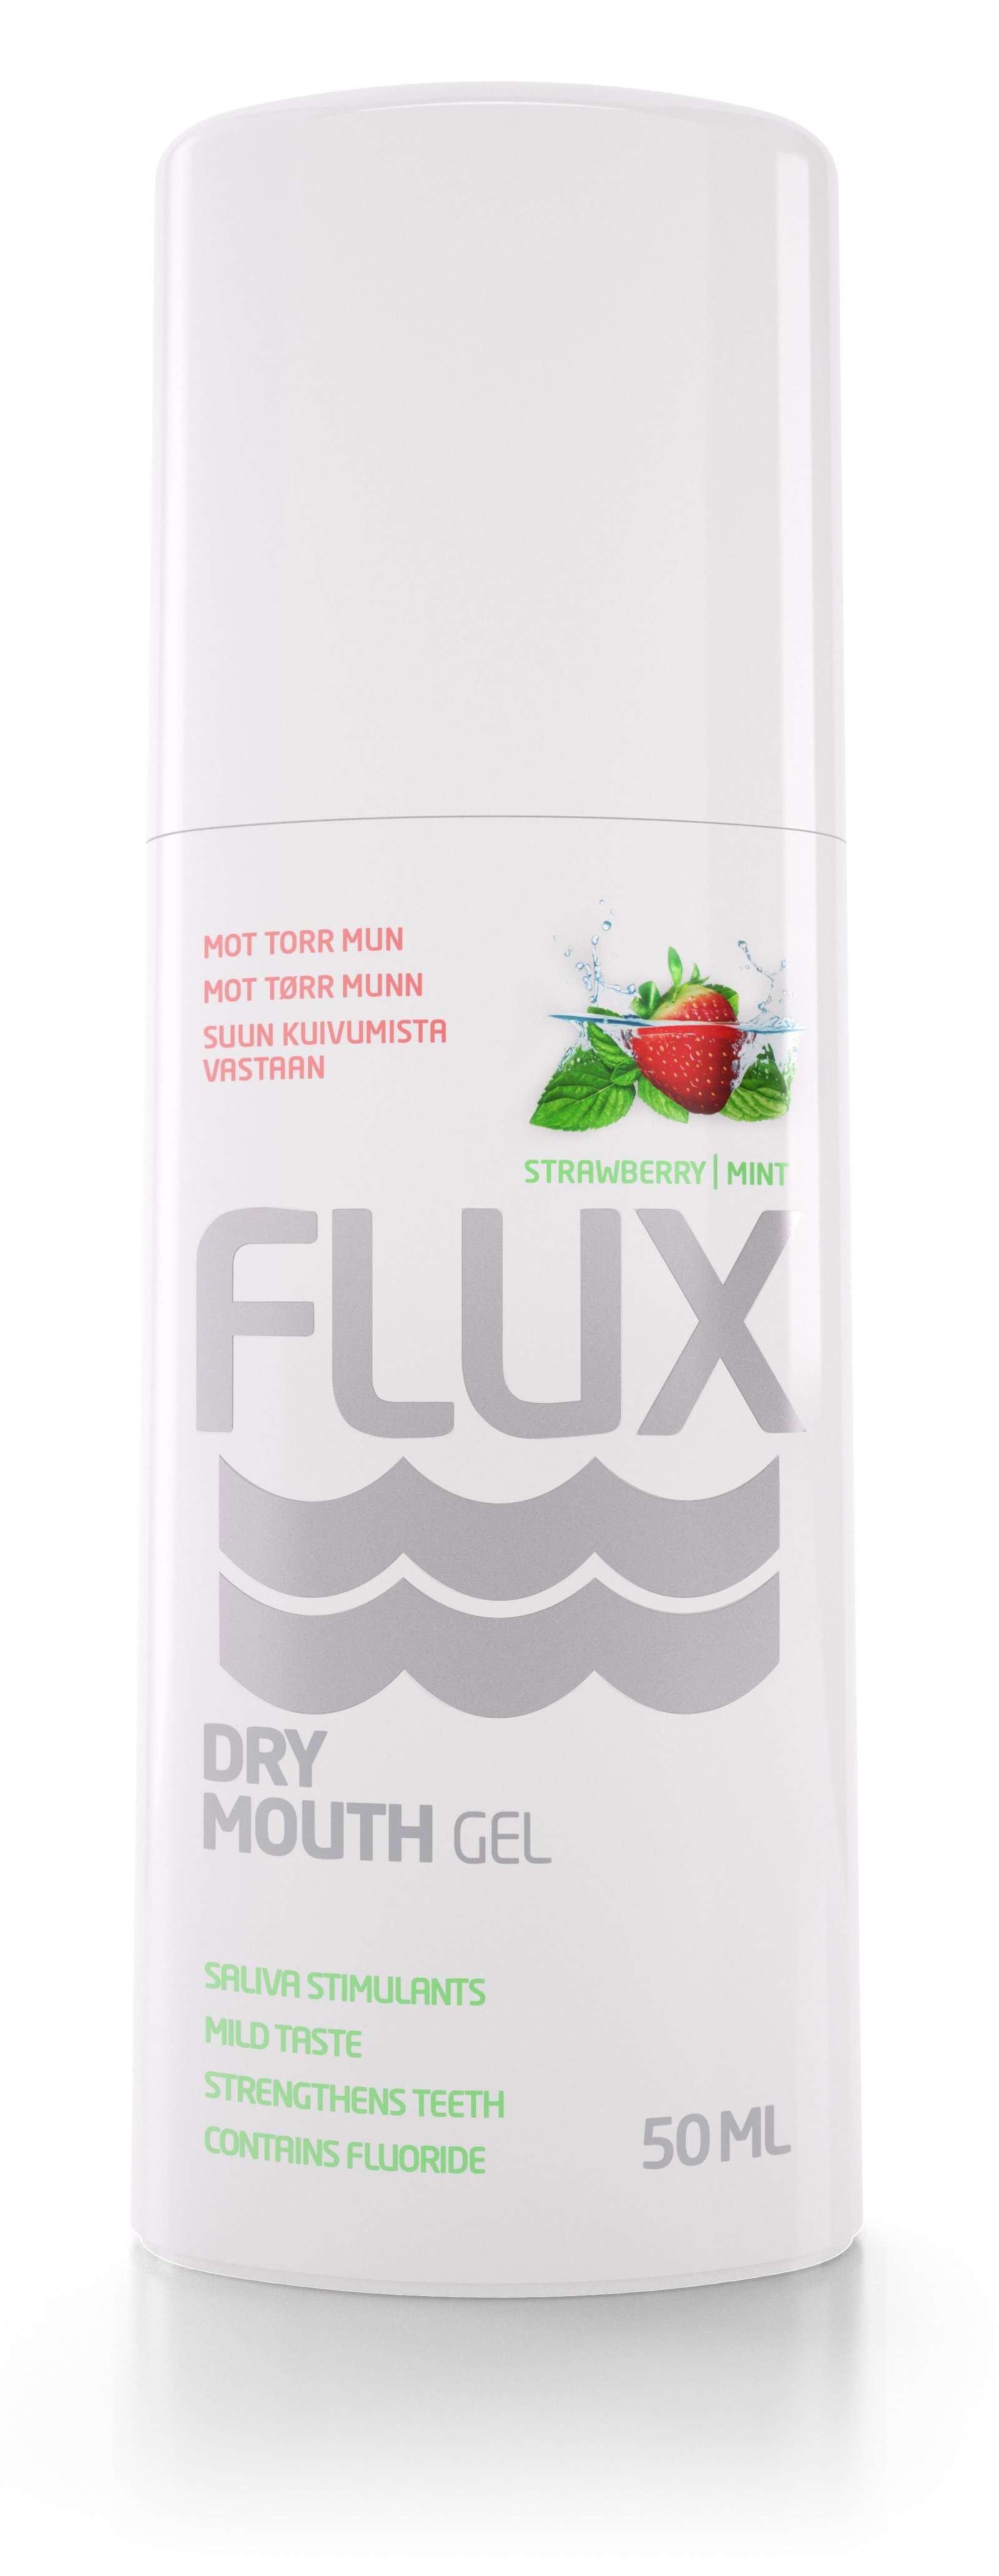 FLUX Dry Mouth Gel 50 ml